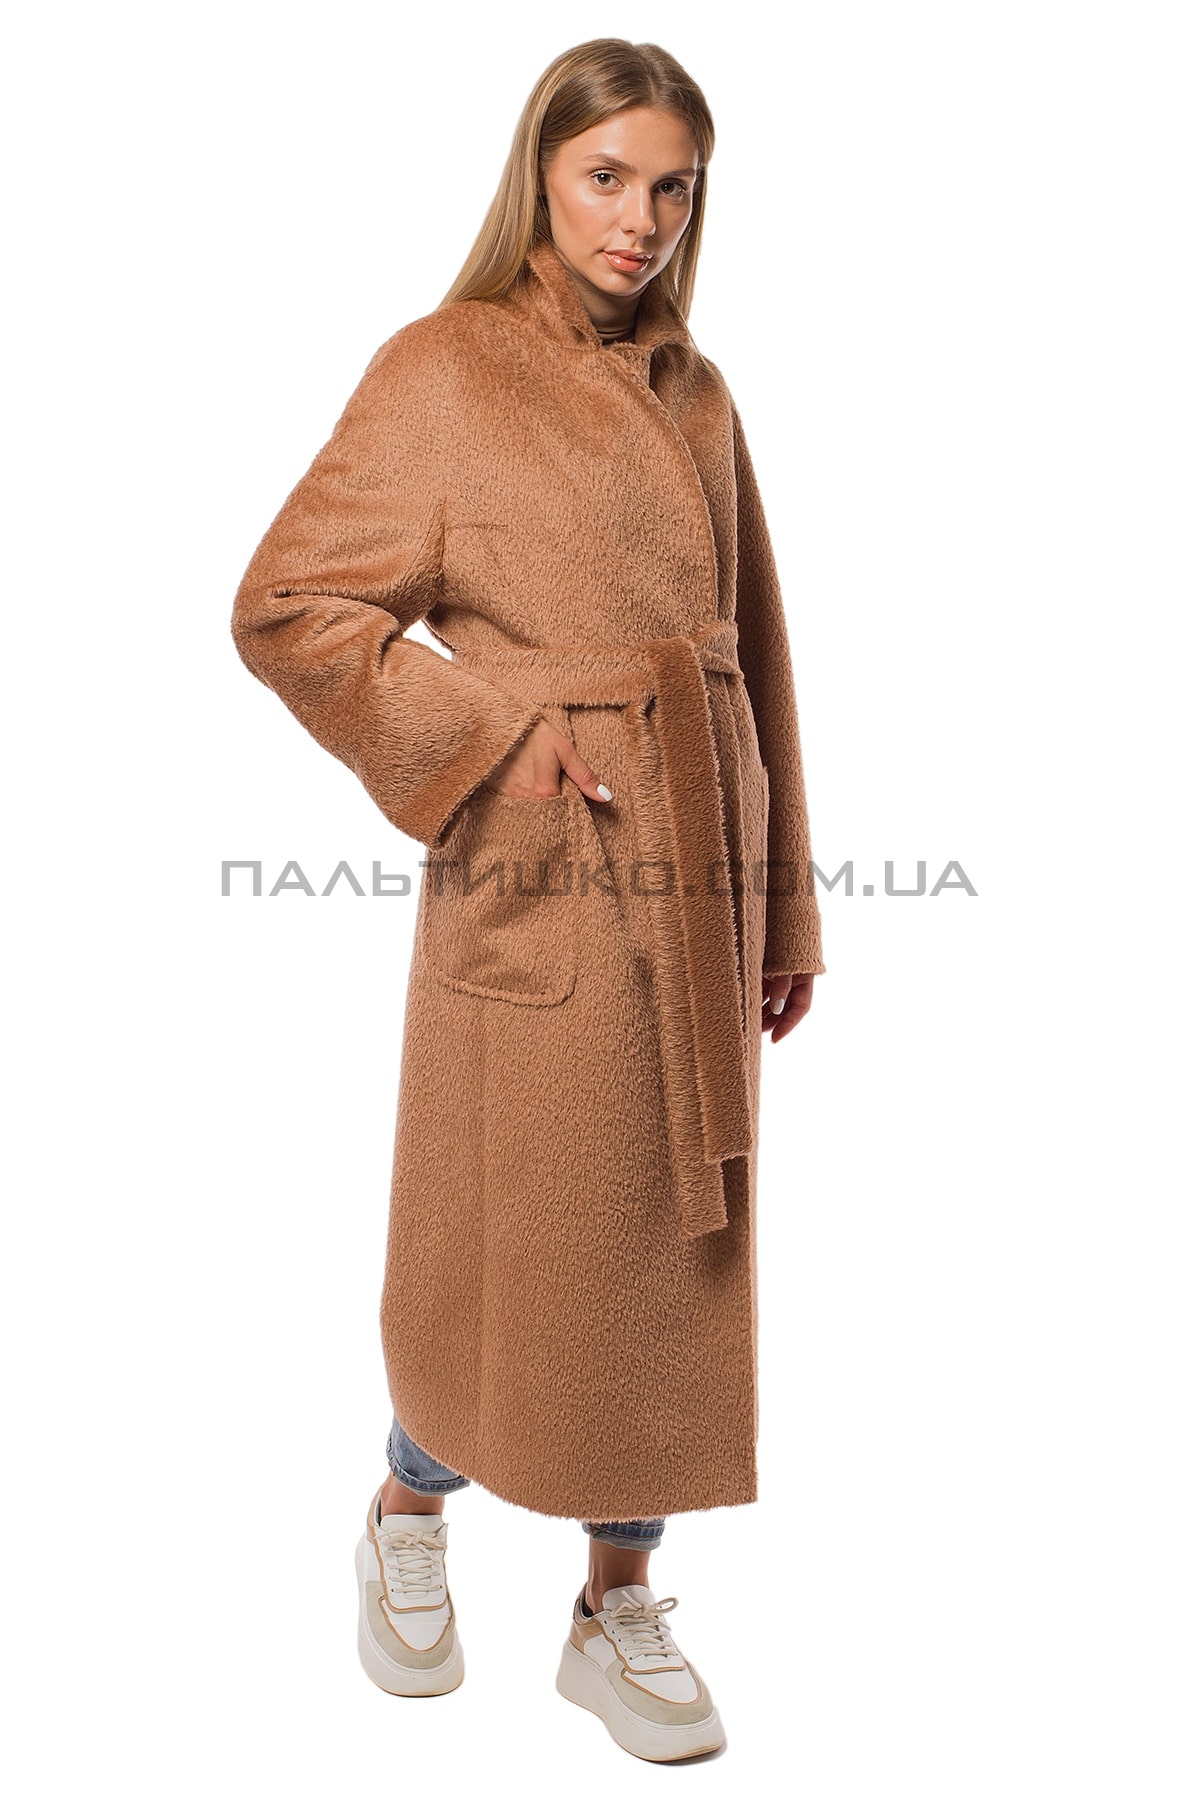  Жіноче пальто-шуба